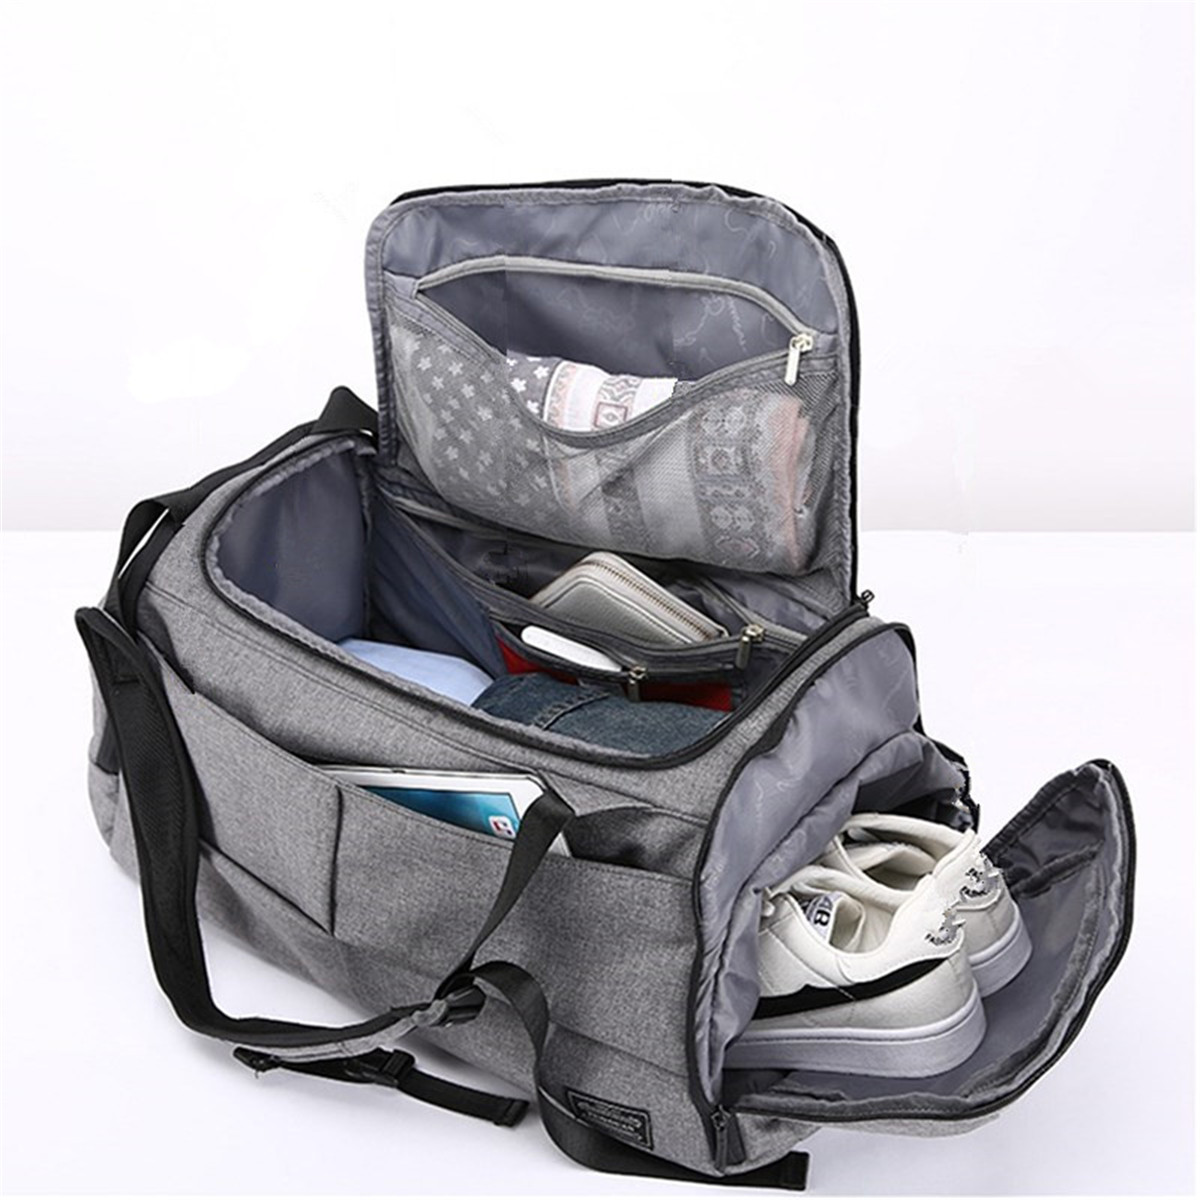 Outdoor-Men-Women-Luggage-Travel-Bag-Satchel-Shoulder-Gym-Sports-Handbag-with-Shoes-Storage-1279187-7